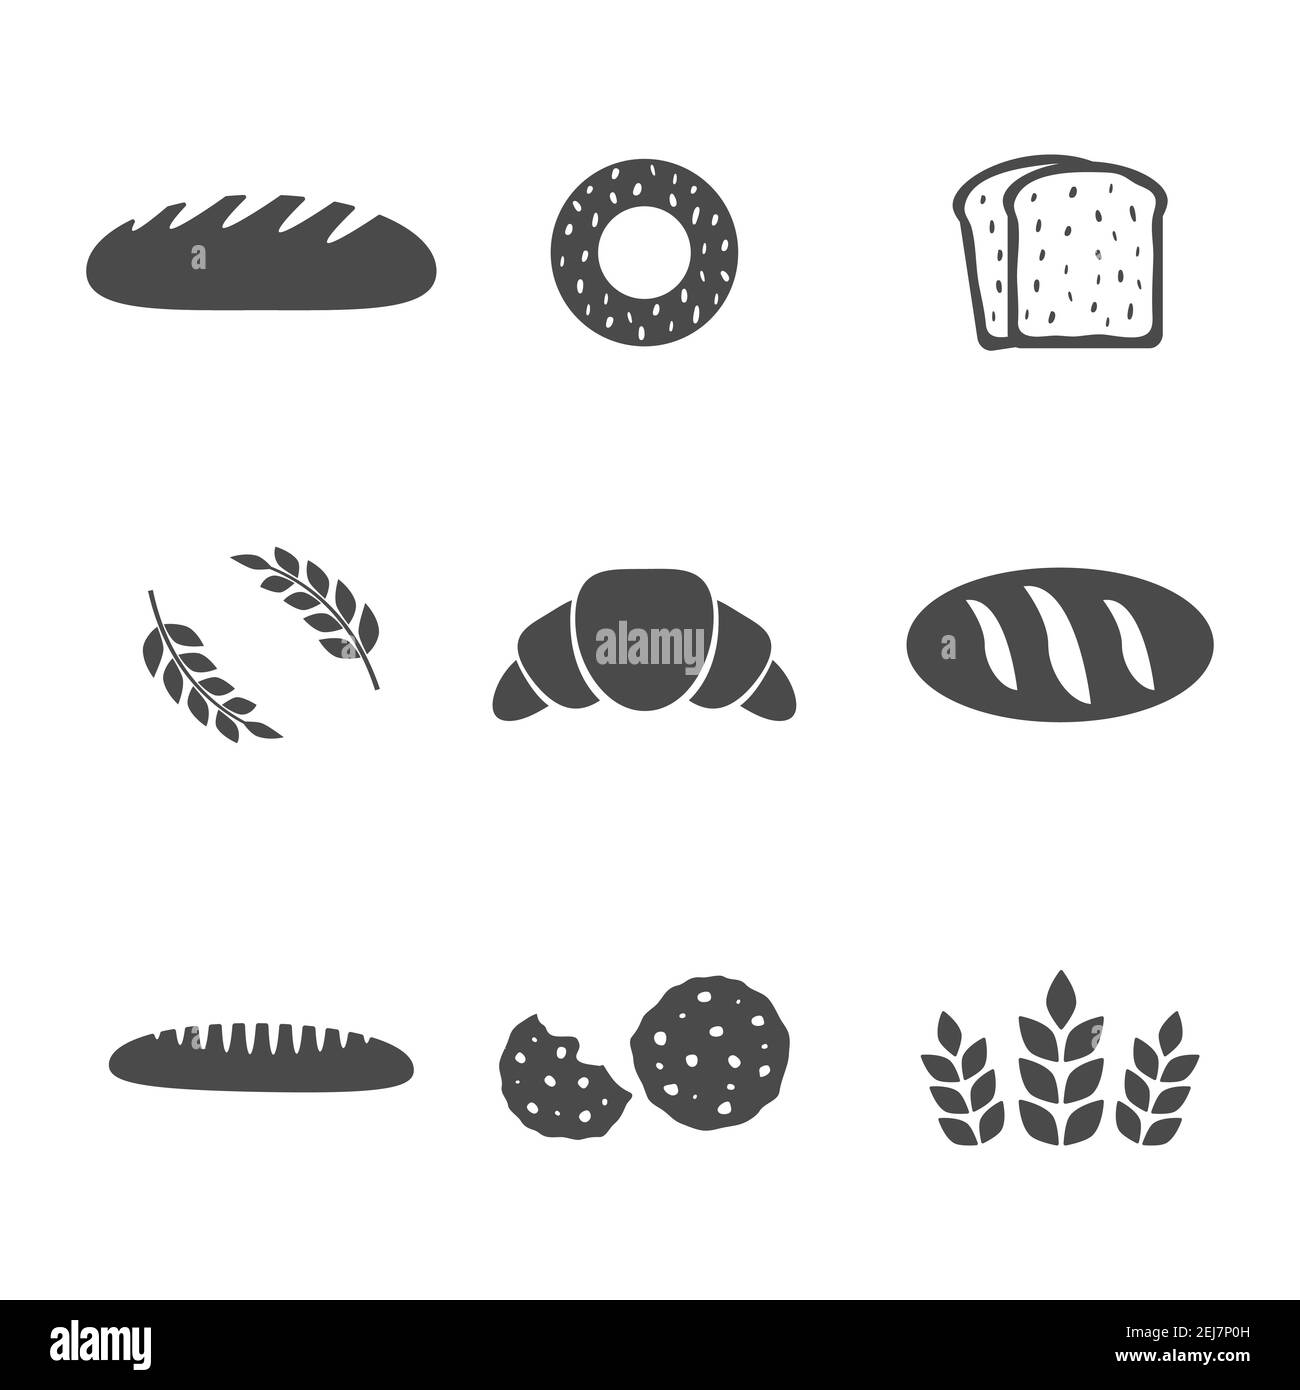 Brot-Symbole eingestellt. Bäckereiprodukte Silhouette Kollektion. Vektor-Lebensmittel-Illustration isoliert auf weiß Stock Vektor